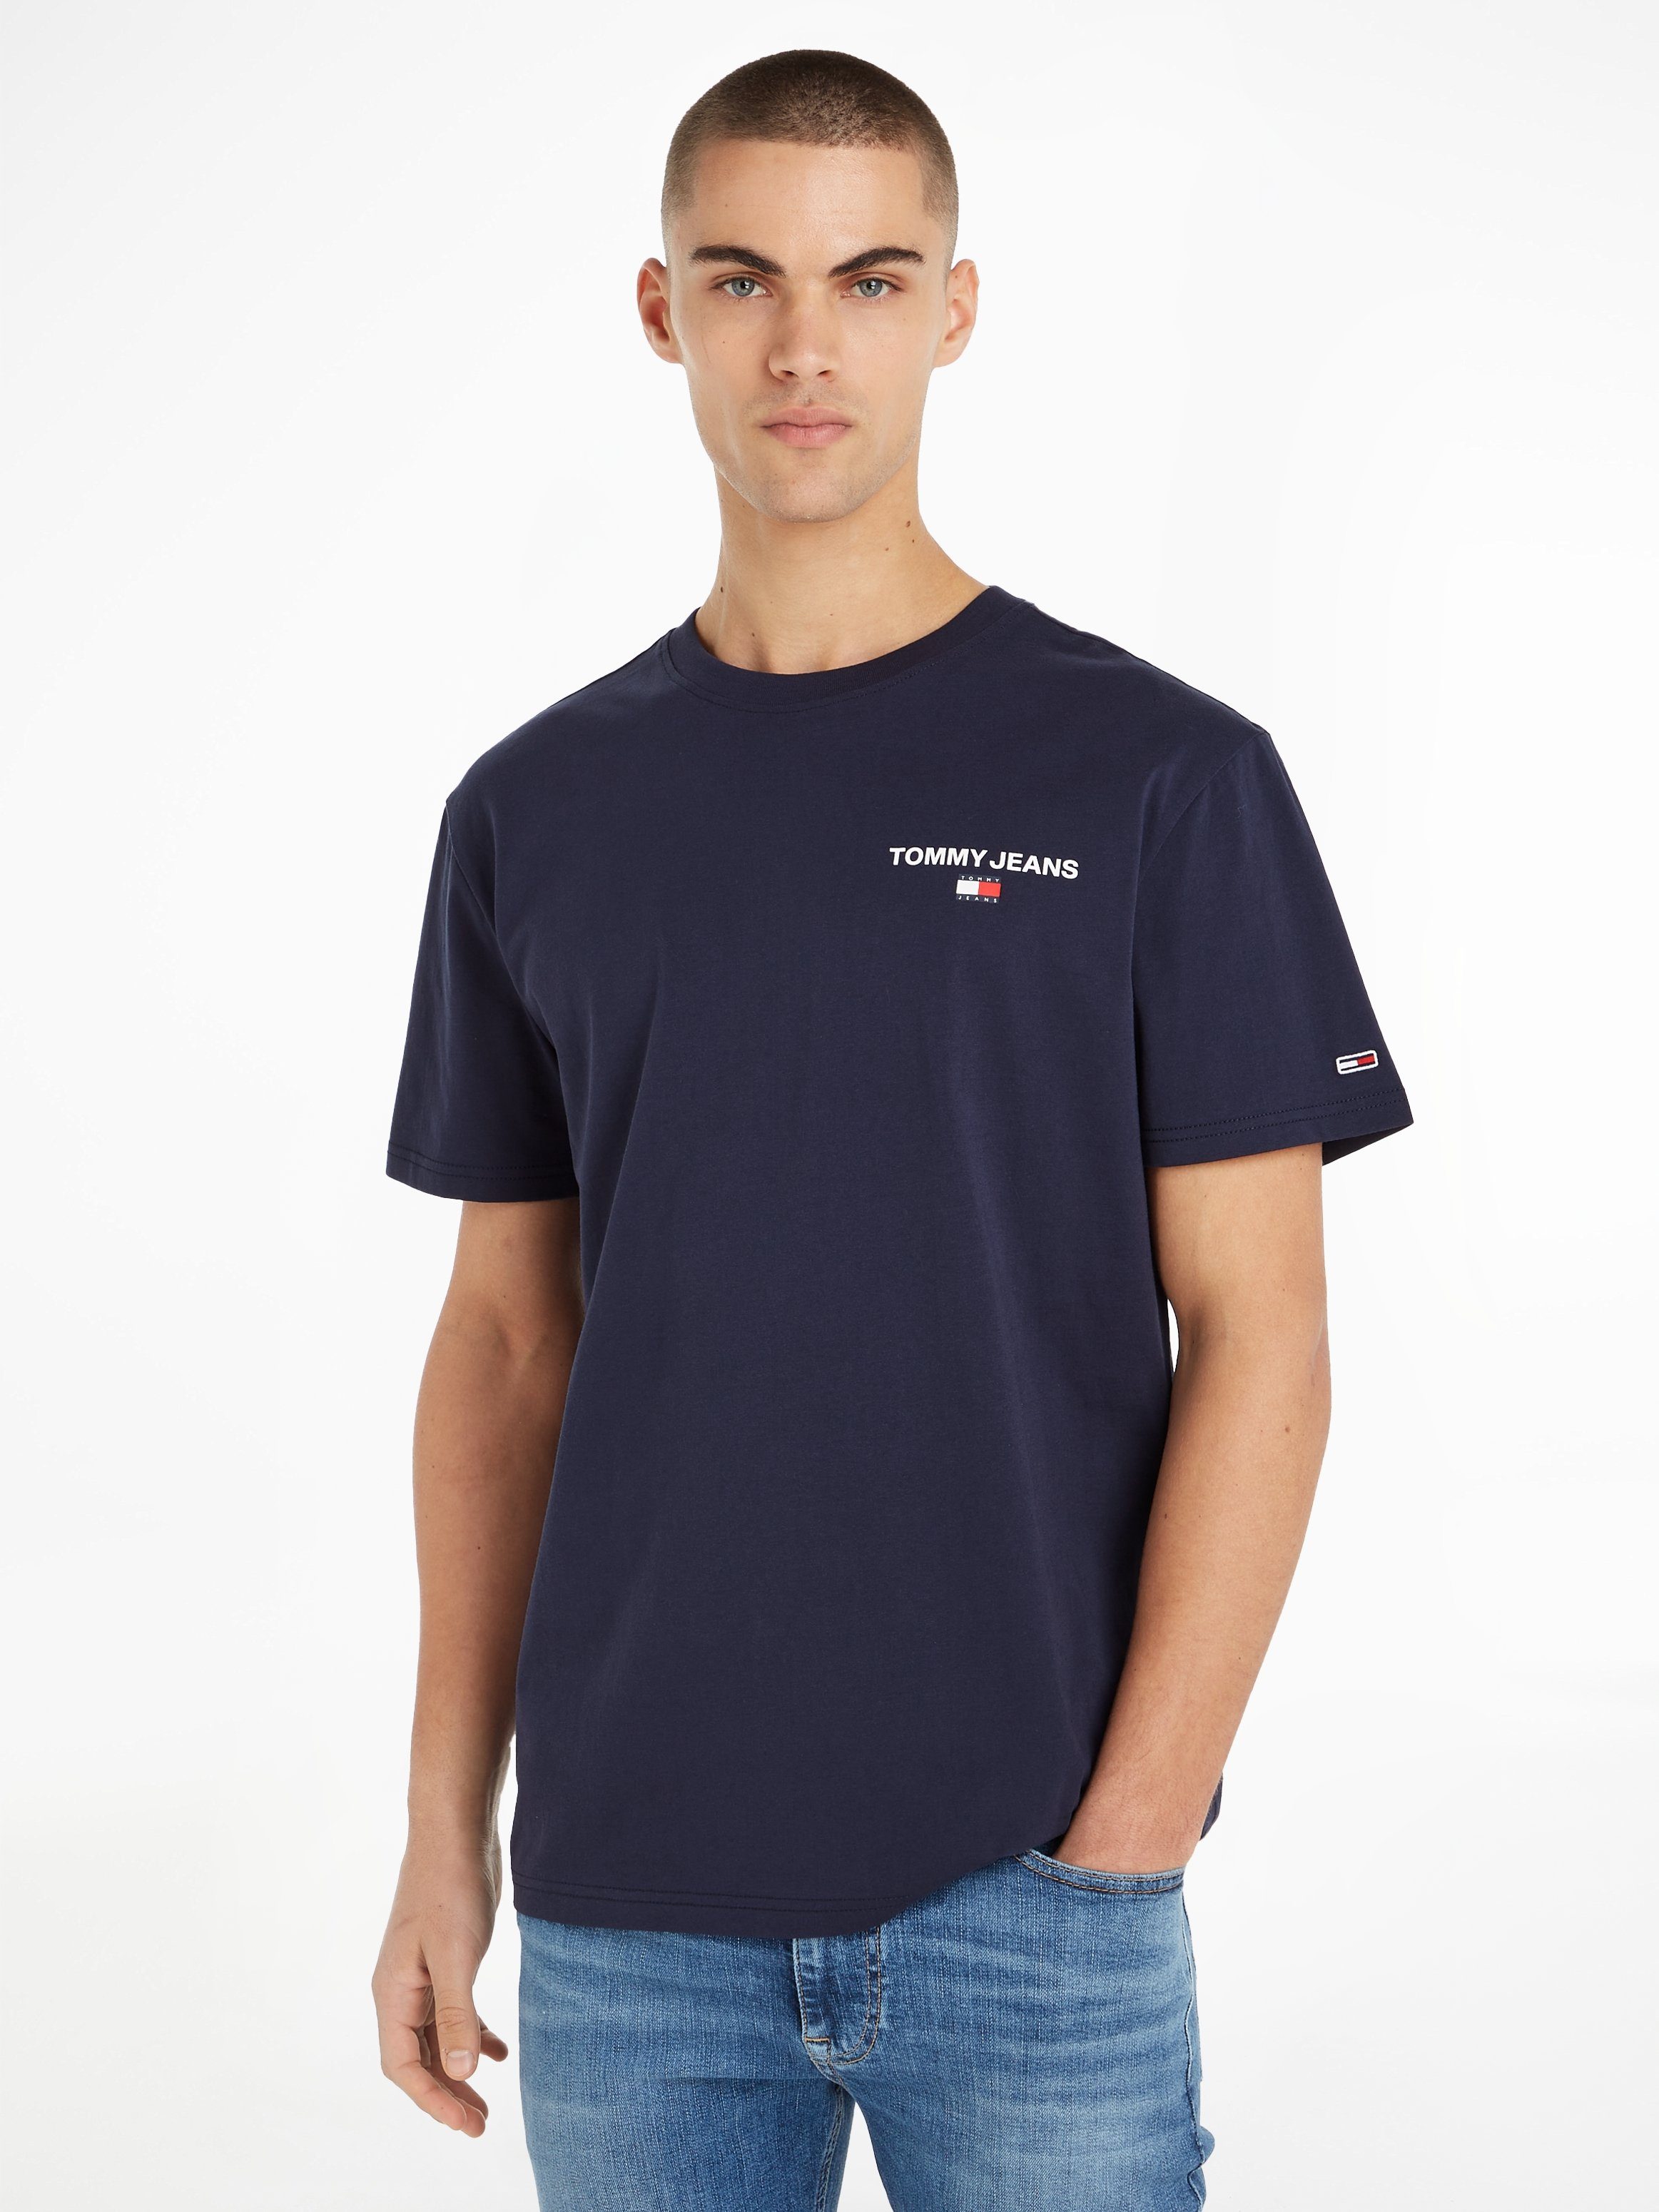 PRINT LINEAR Twilight Navy TEE BACK TJM CLSC Tommy Jeans T-Shirt